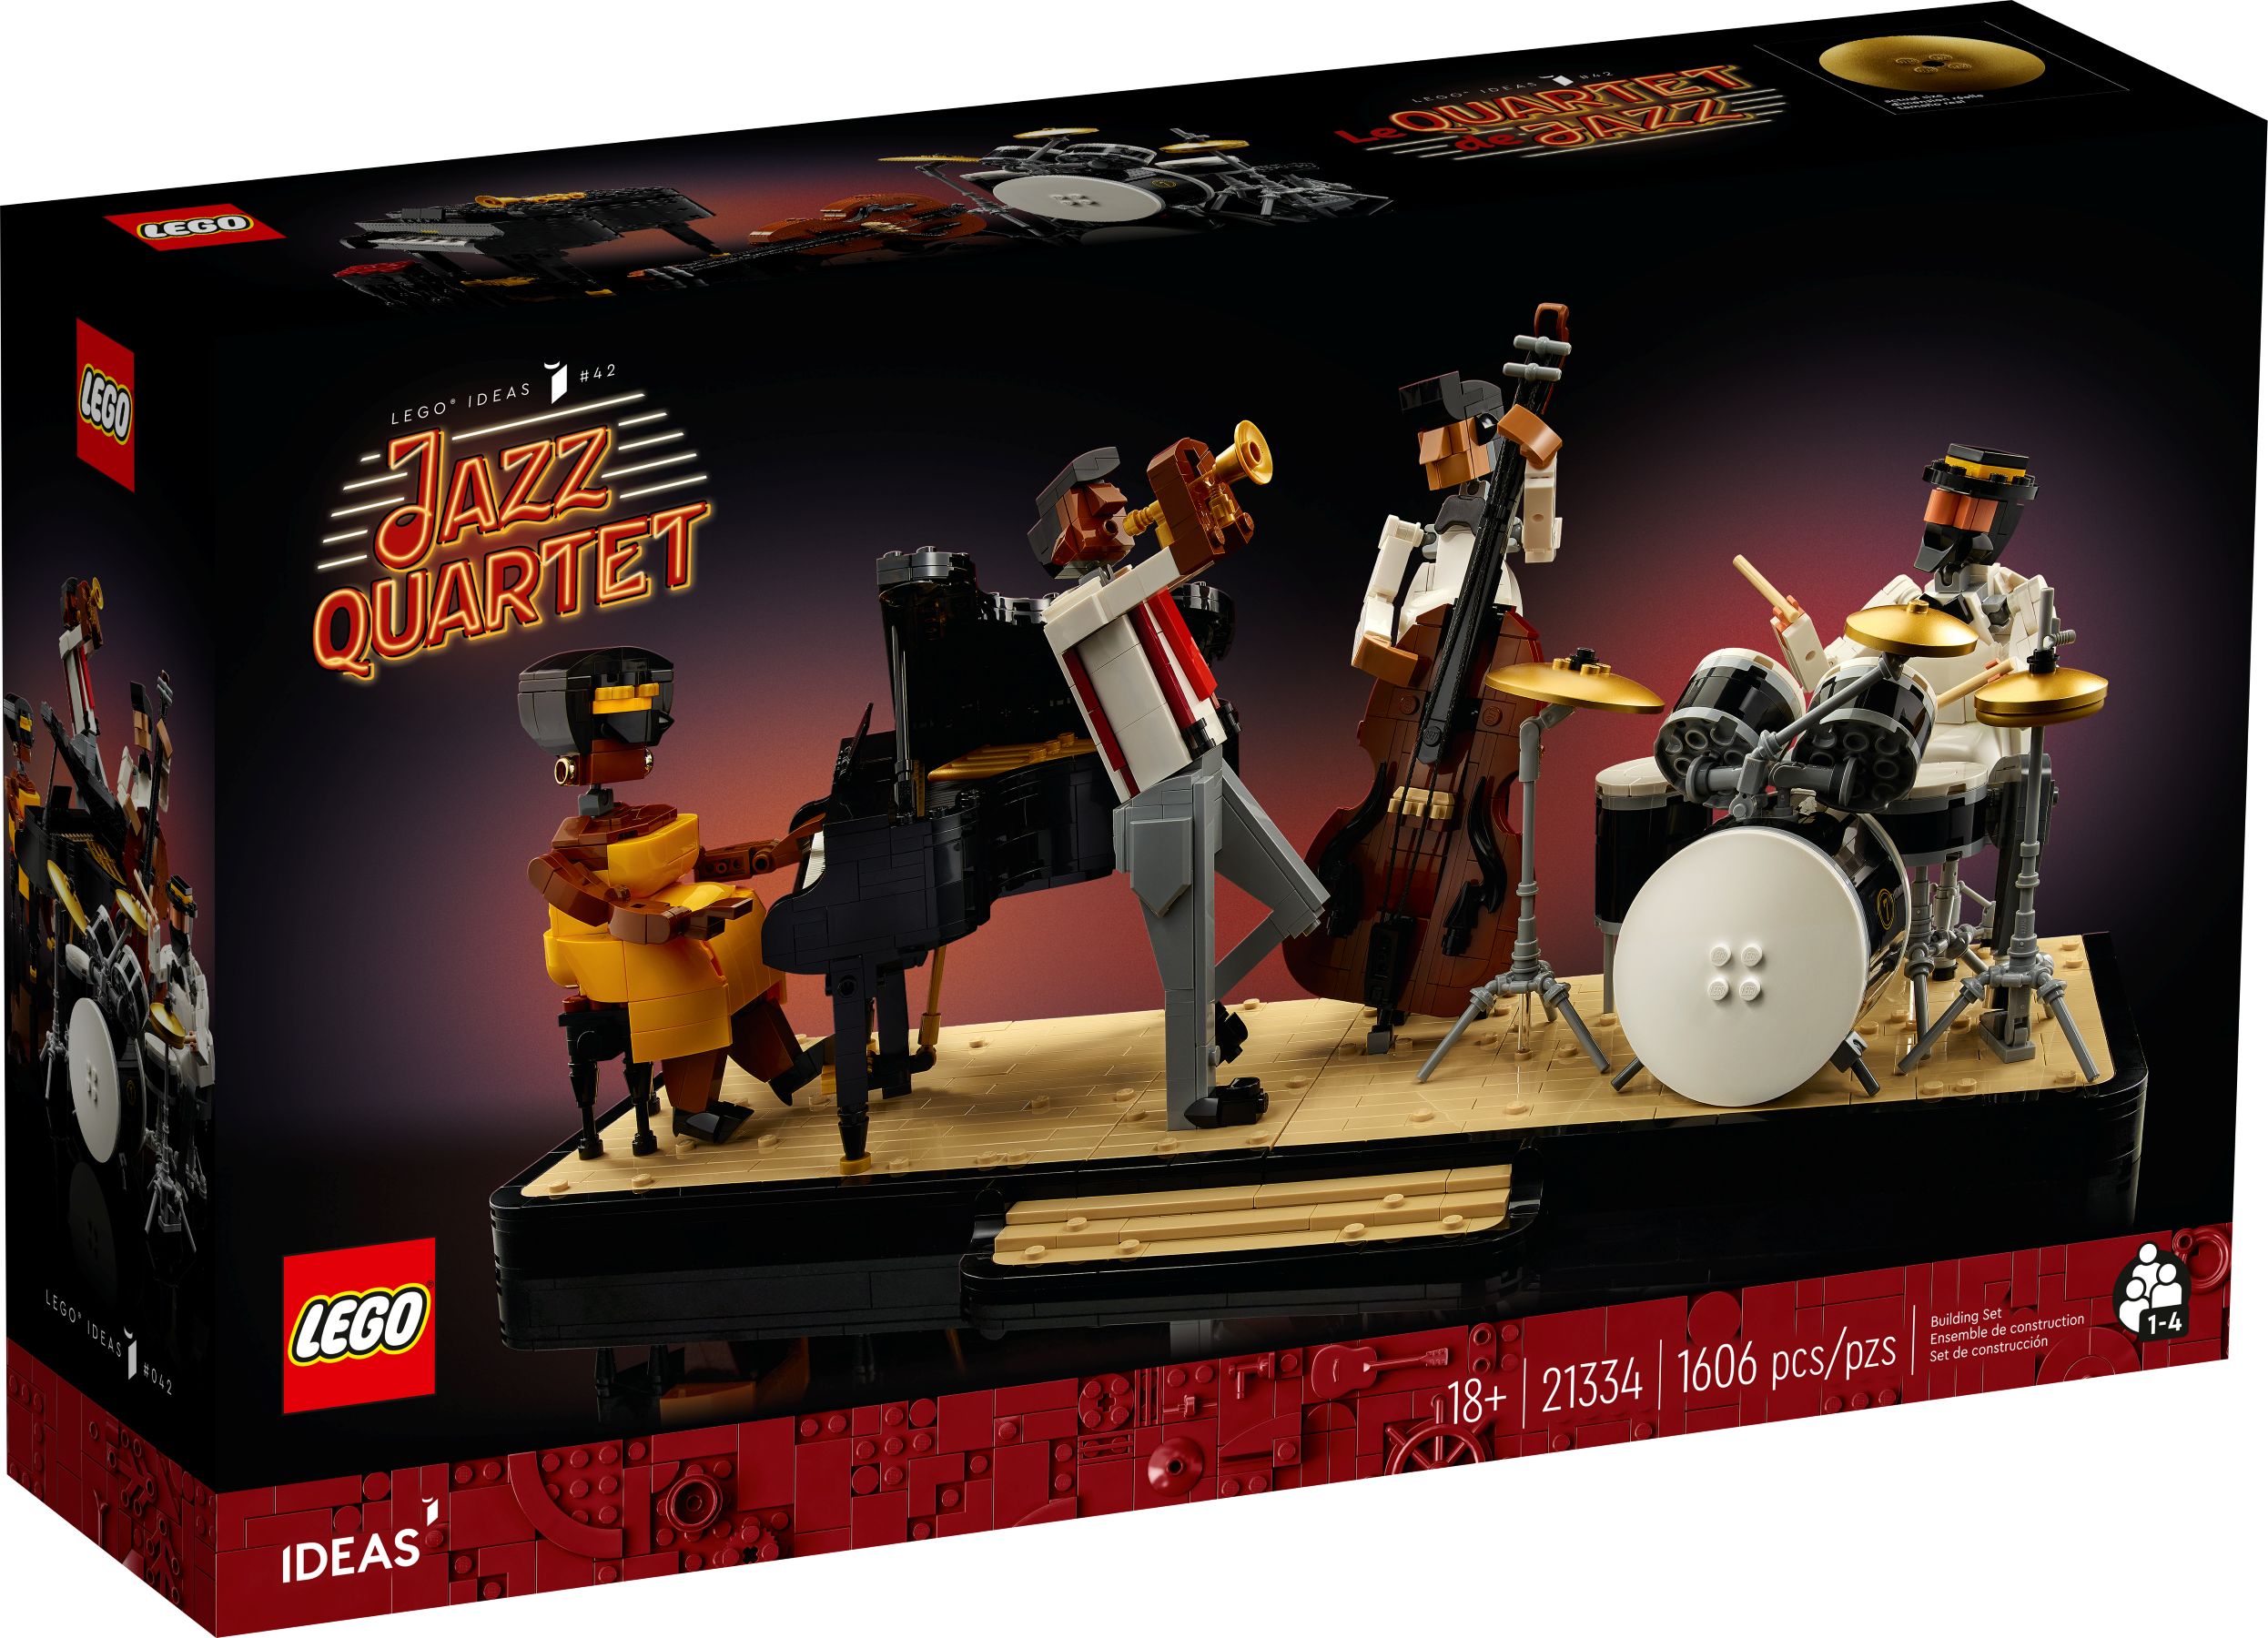 LEGO Ideas 21334 Jazz-Quartett LEGO_21334_alt1.jpg